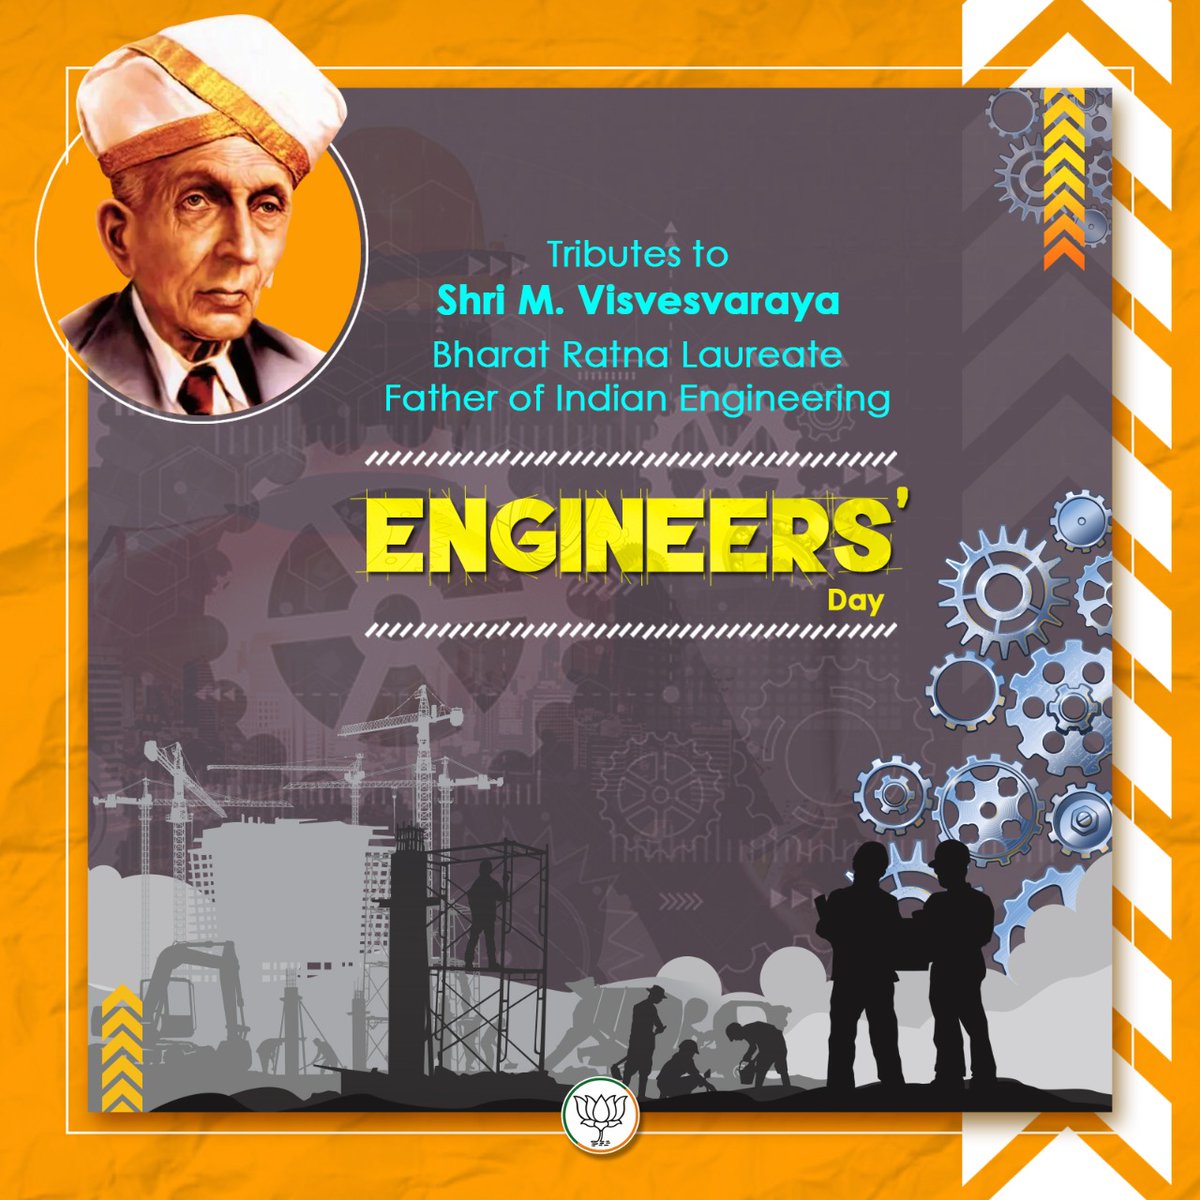 Heartfelt tributes to Bharat Ratna laureate, Shri M. Visvesvaraya on his birth anniversary. #EngineersDay